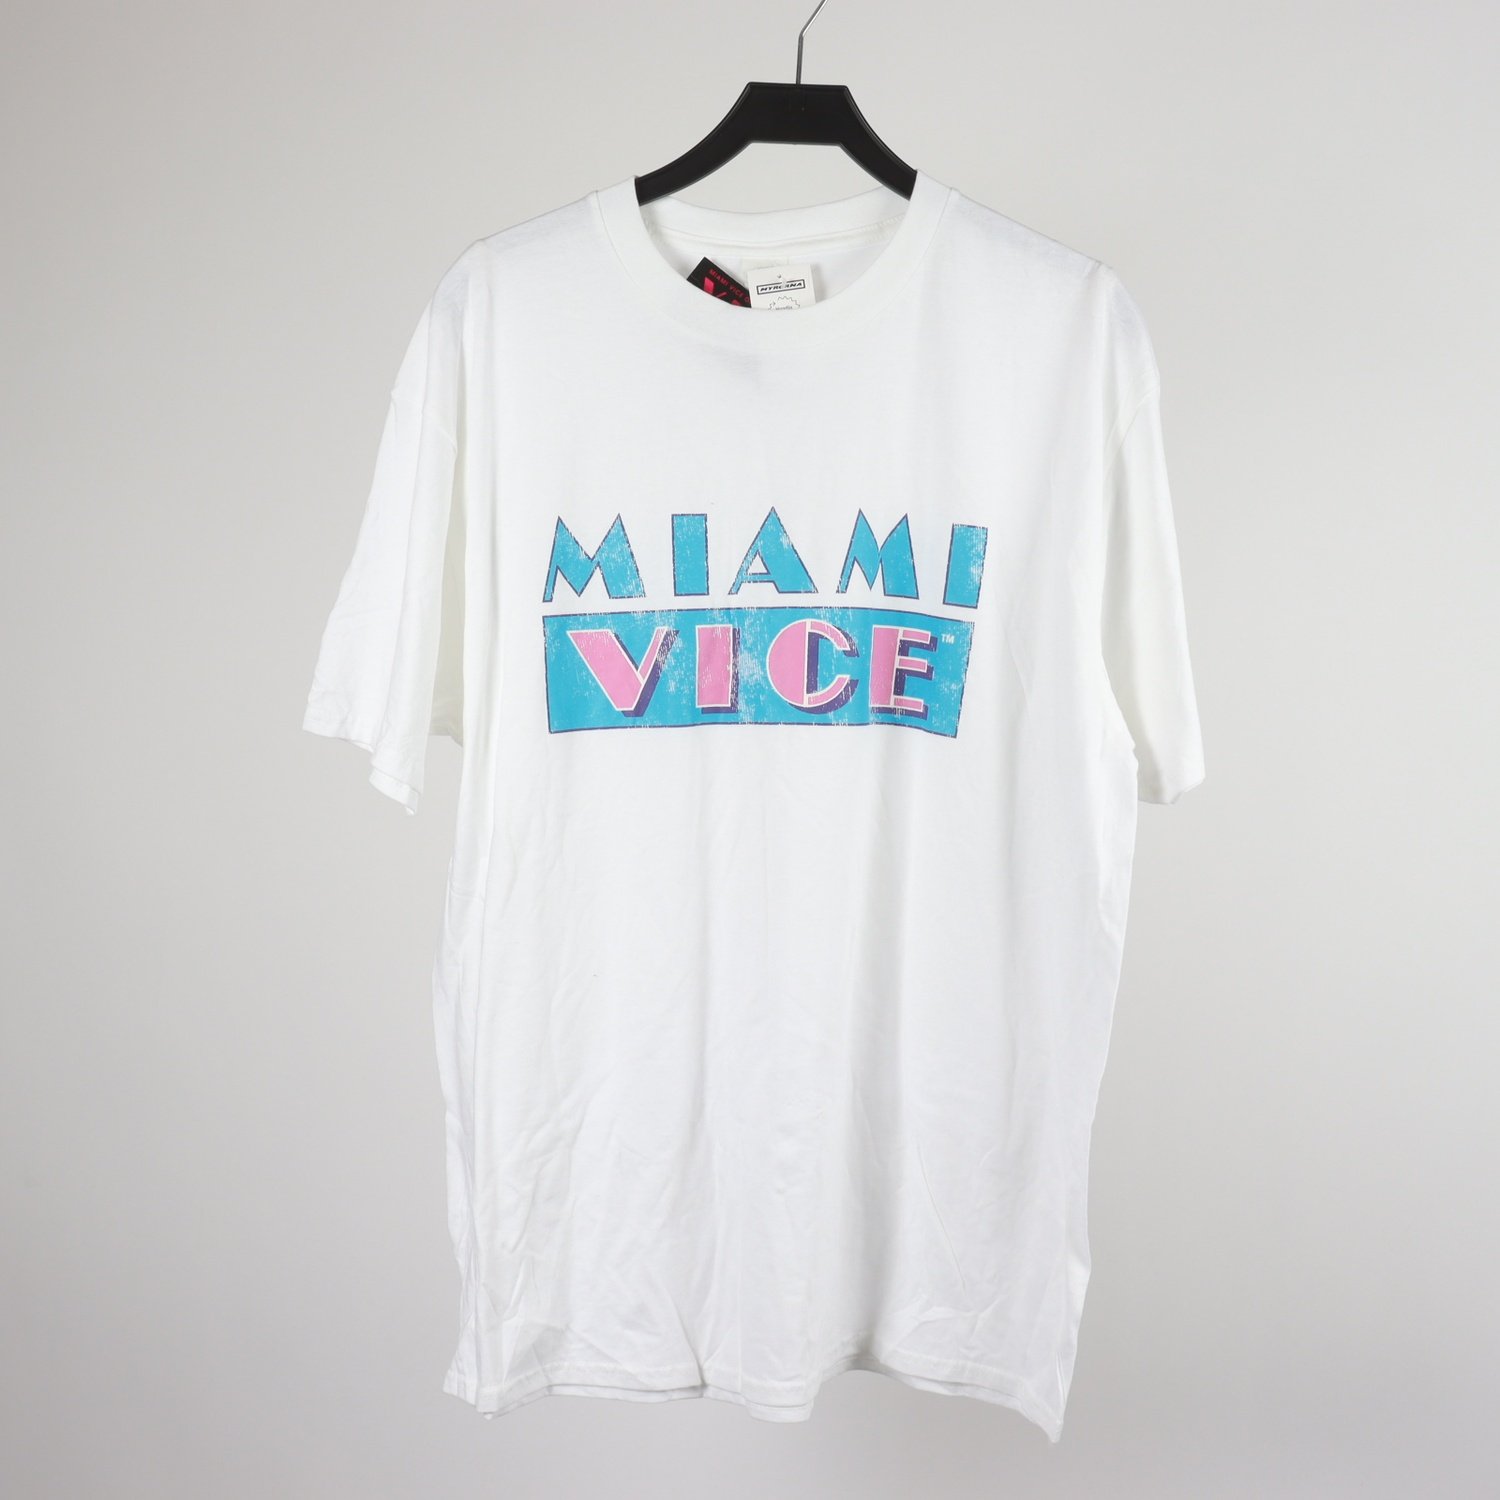 T-shirt, Gildan, Miami Vice, vit, stl. XL